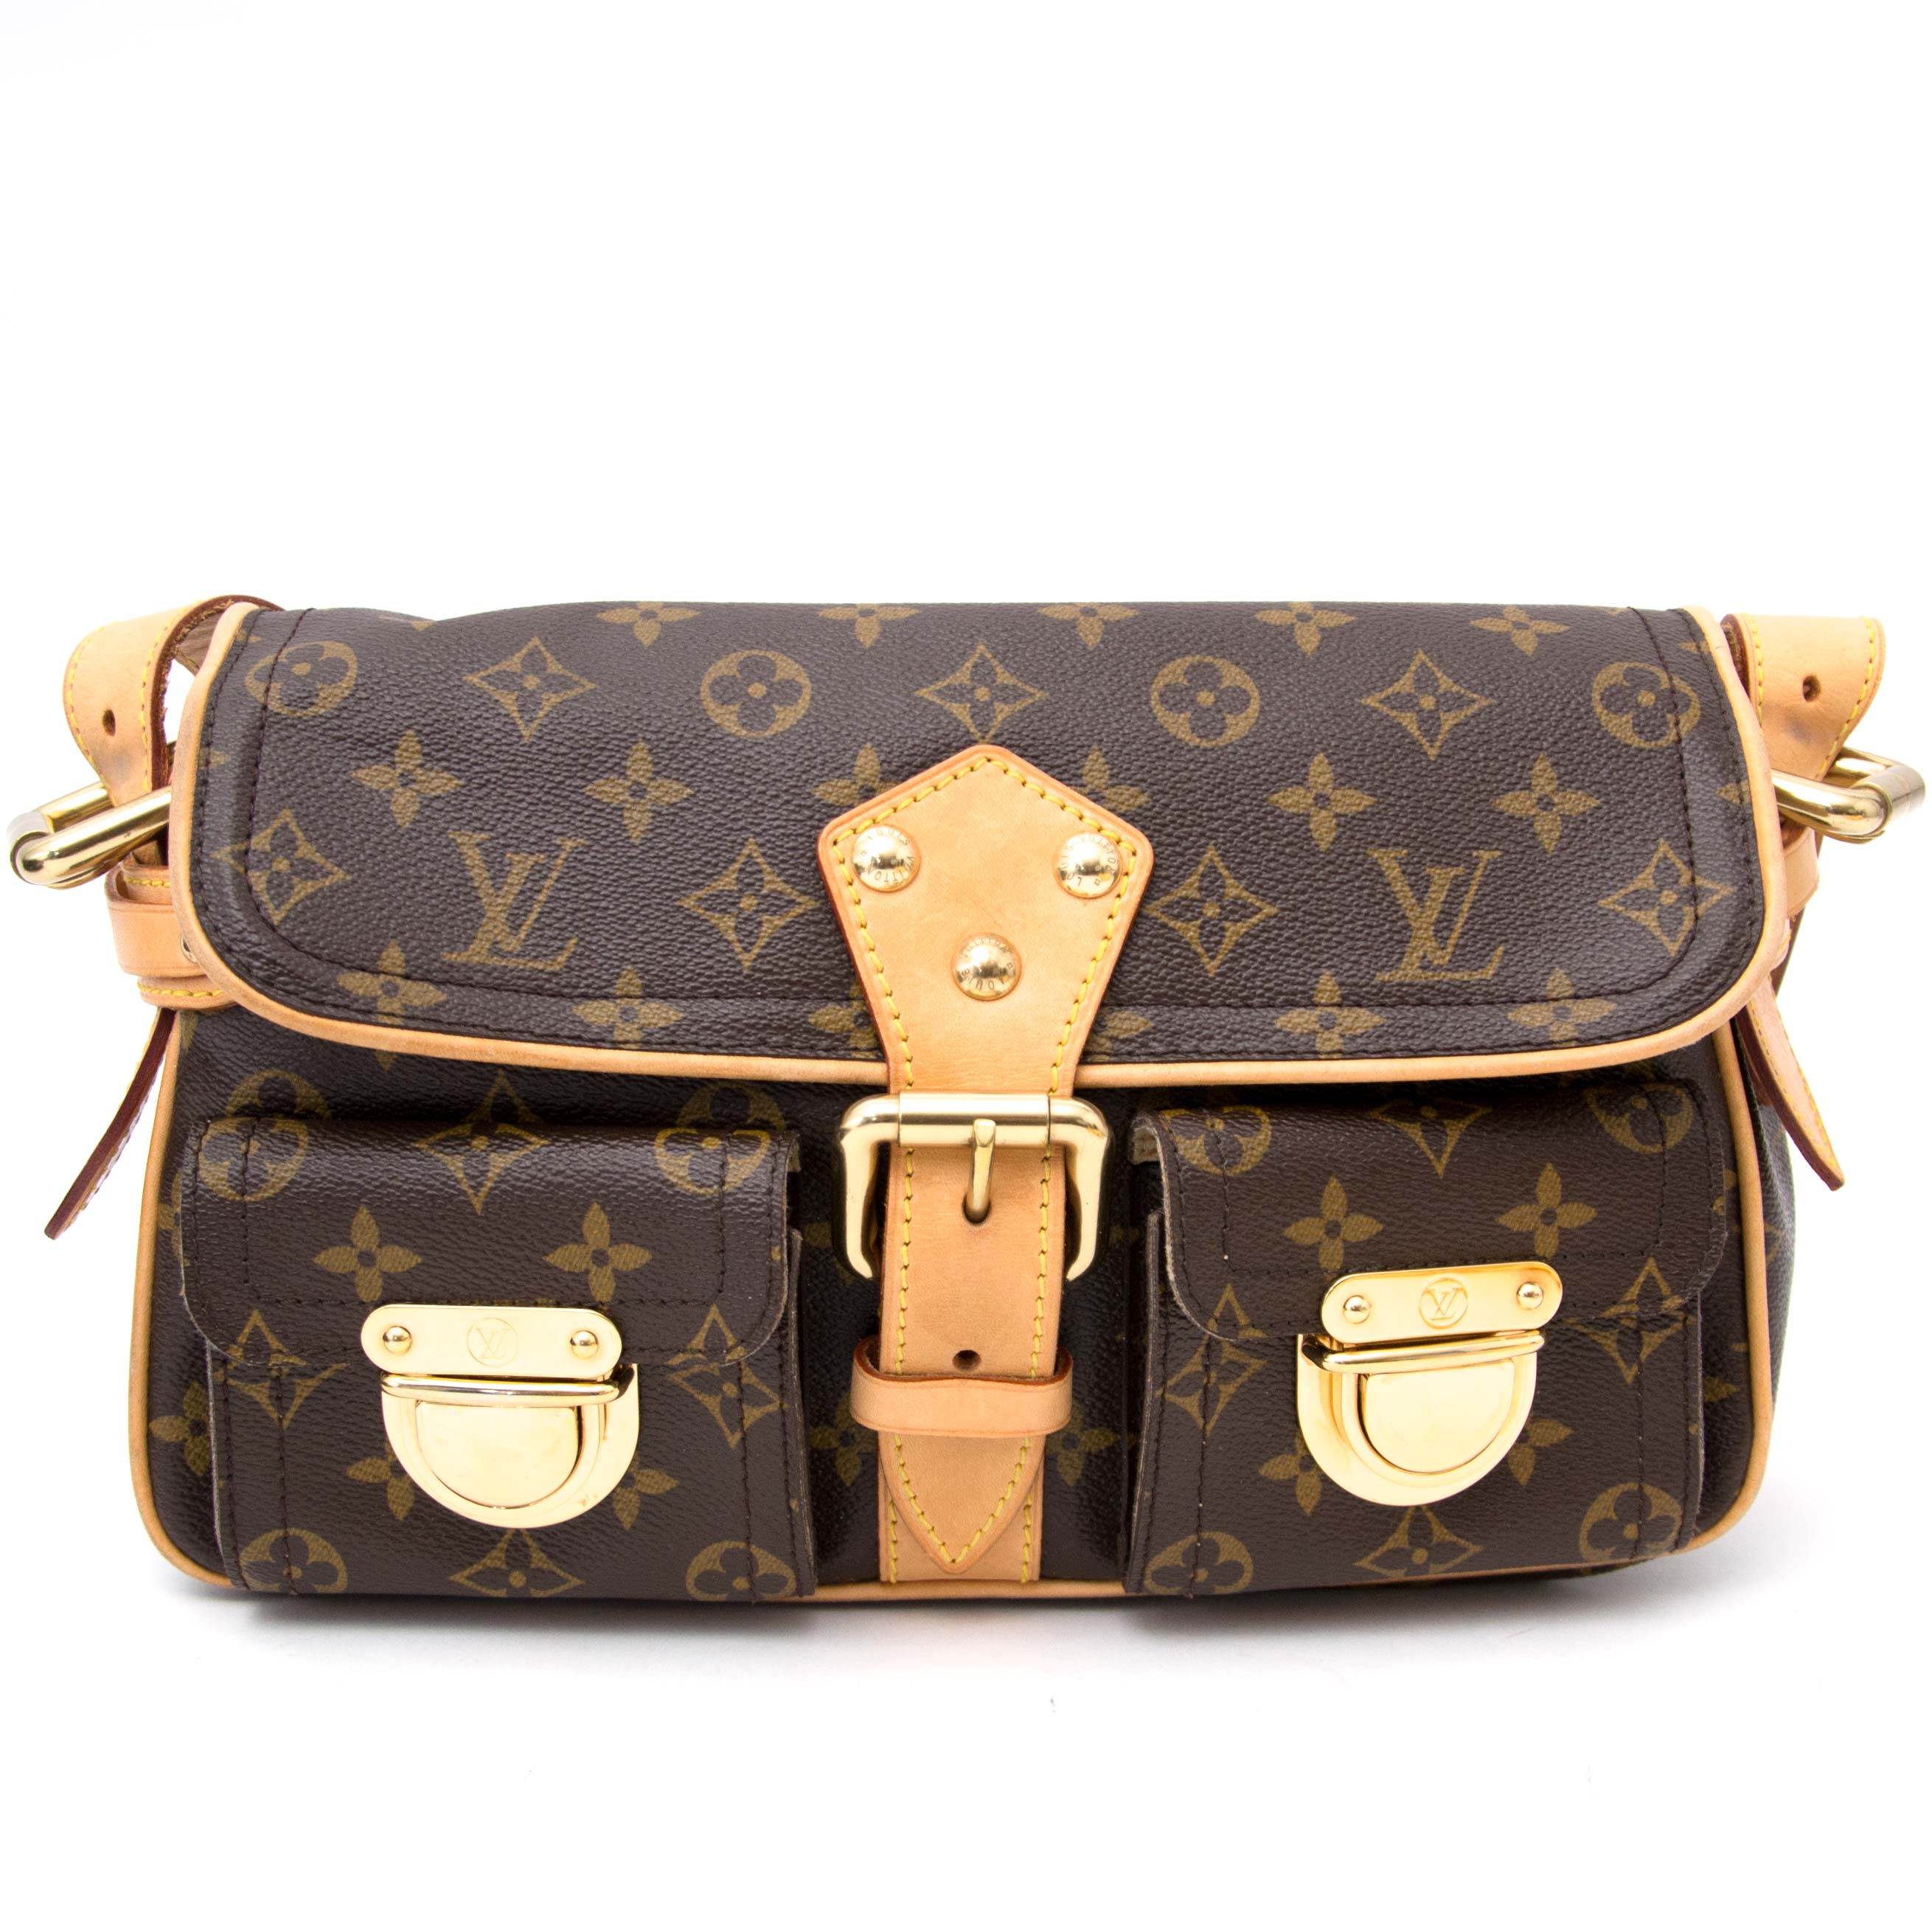 Louis Vuitton Hudson Handbag 384881